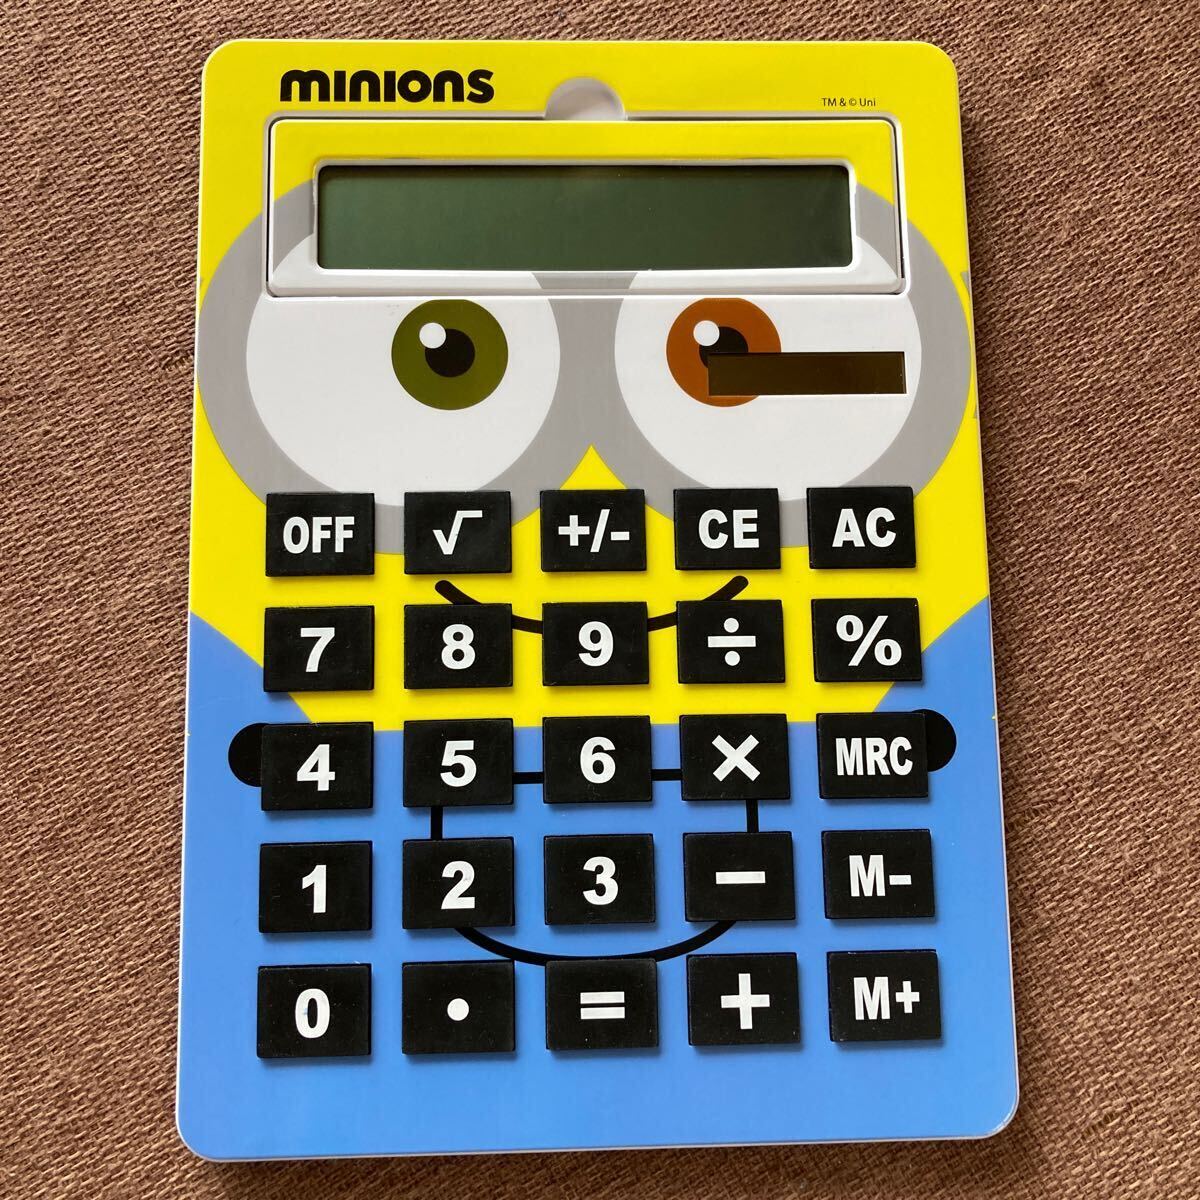  Mini on z( Mini on ) Bick calculator Bob size 29×20.5cm